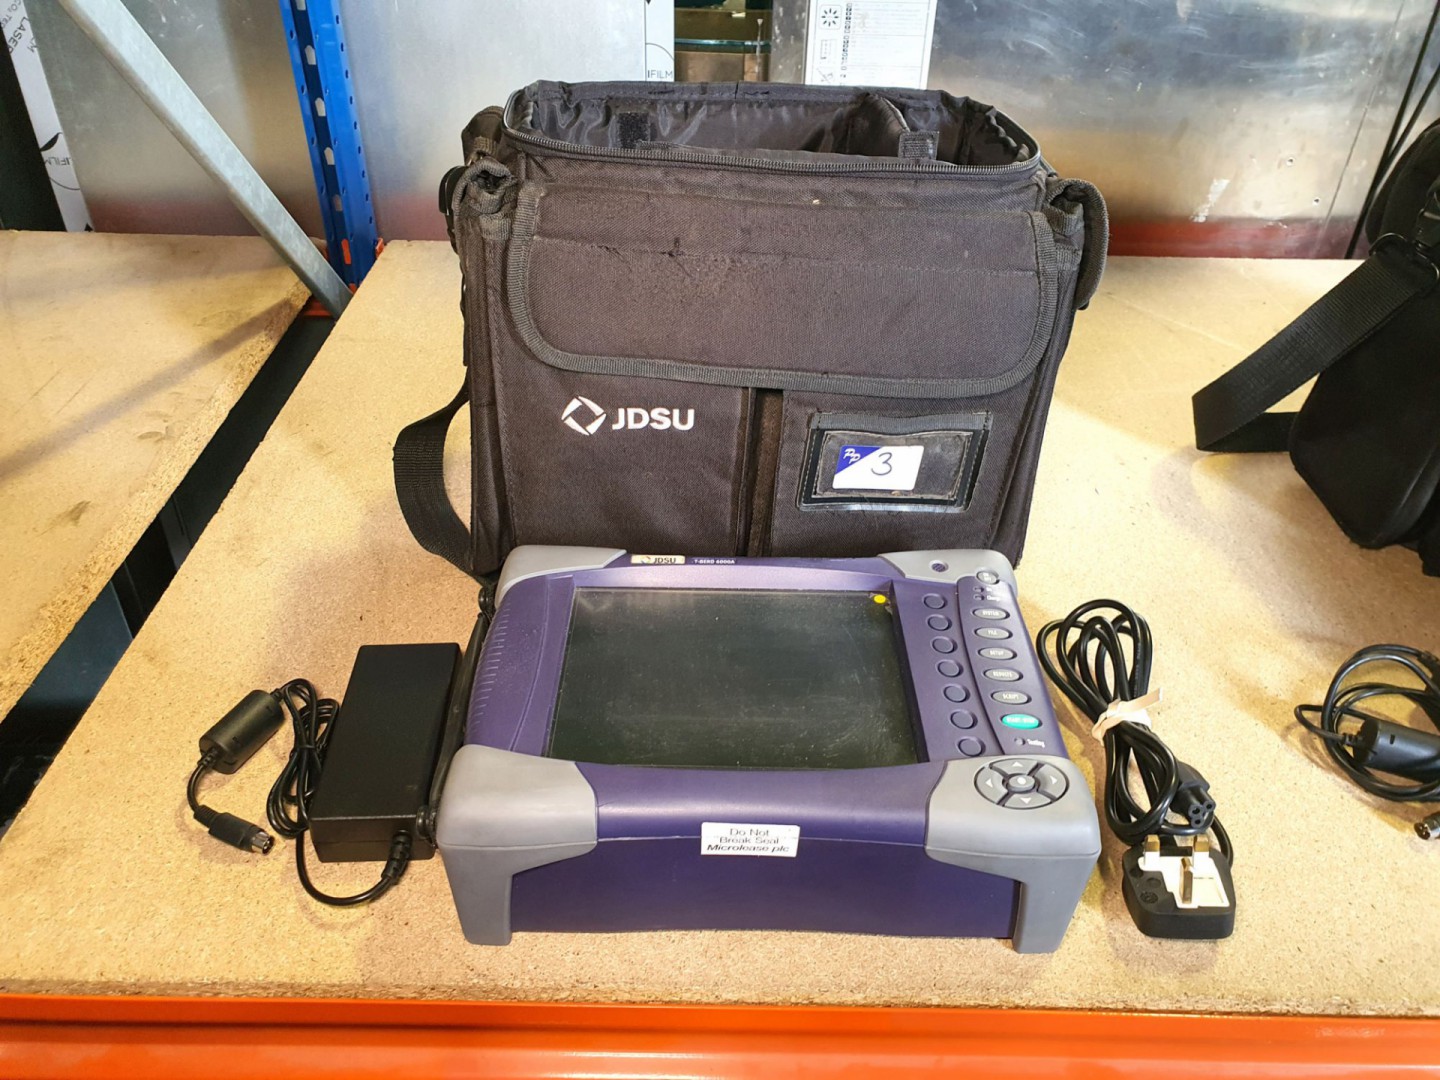 JDSU T-Berd 6000A handheld test set with MSAM C100...